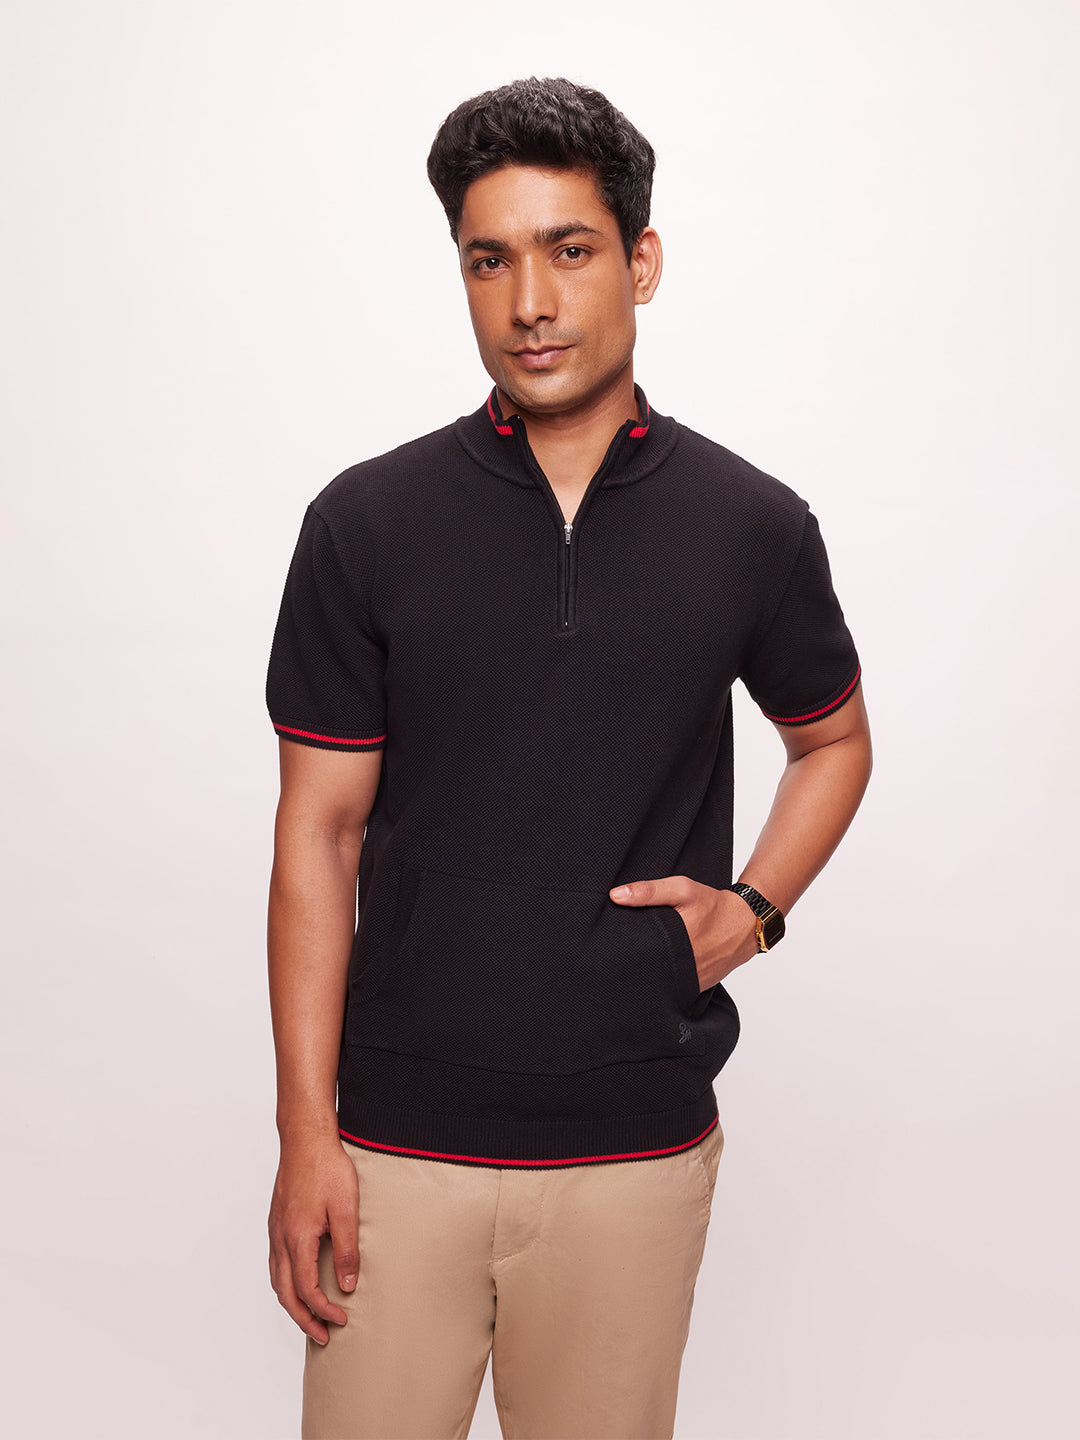 Bombay High Men's Premium Cotton Half Zip Neck Knit Polo T-Shirt